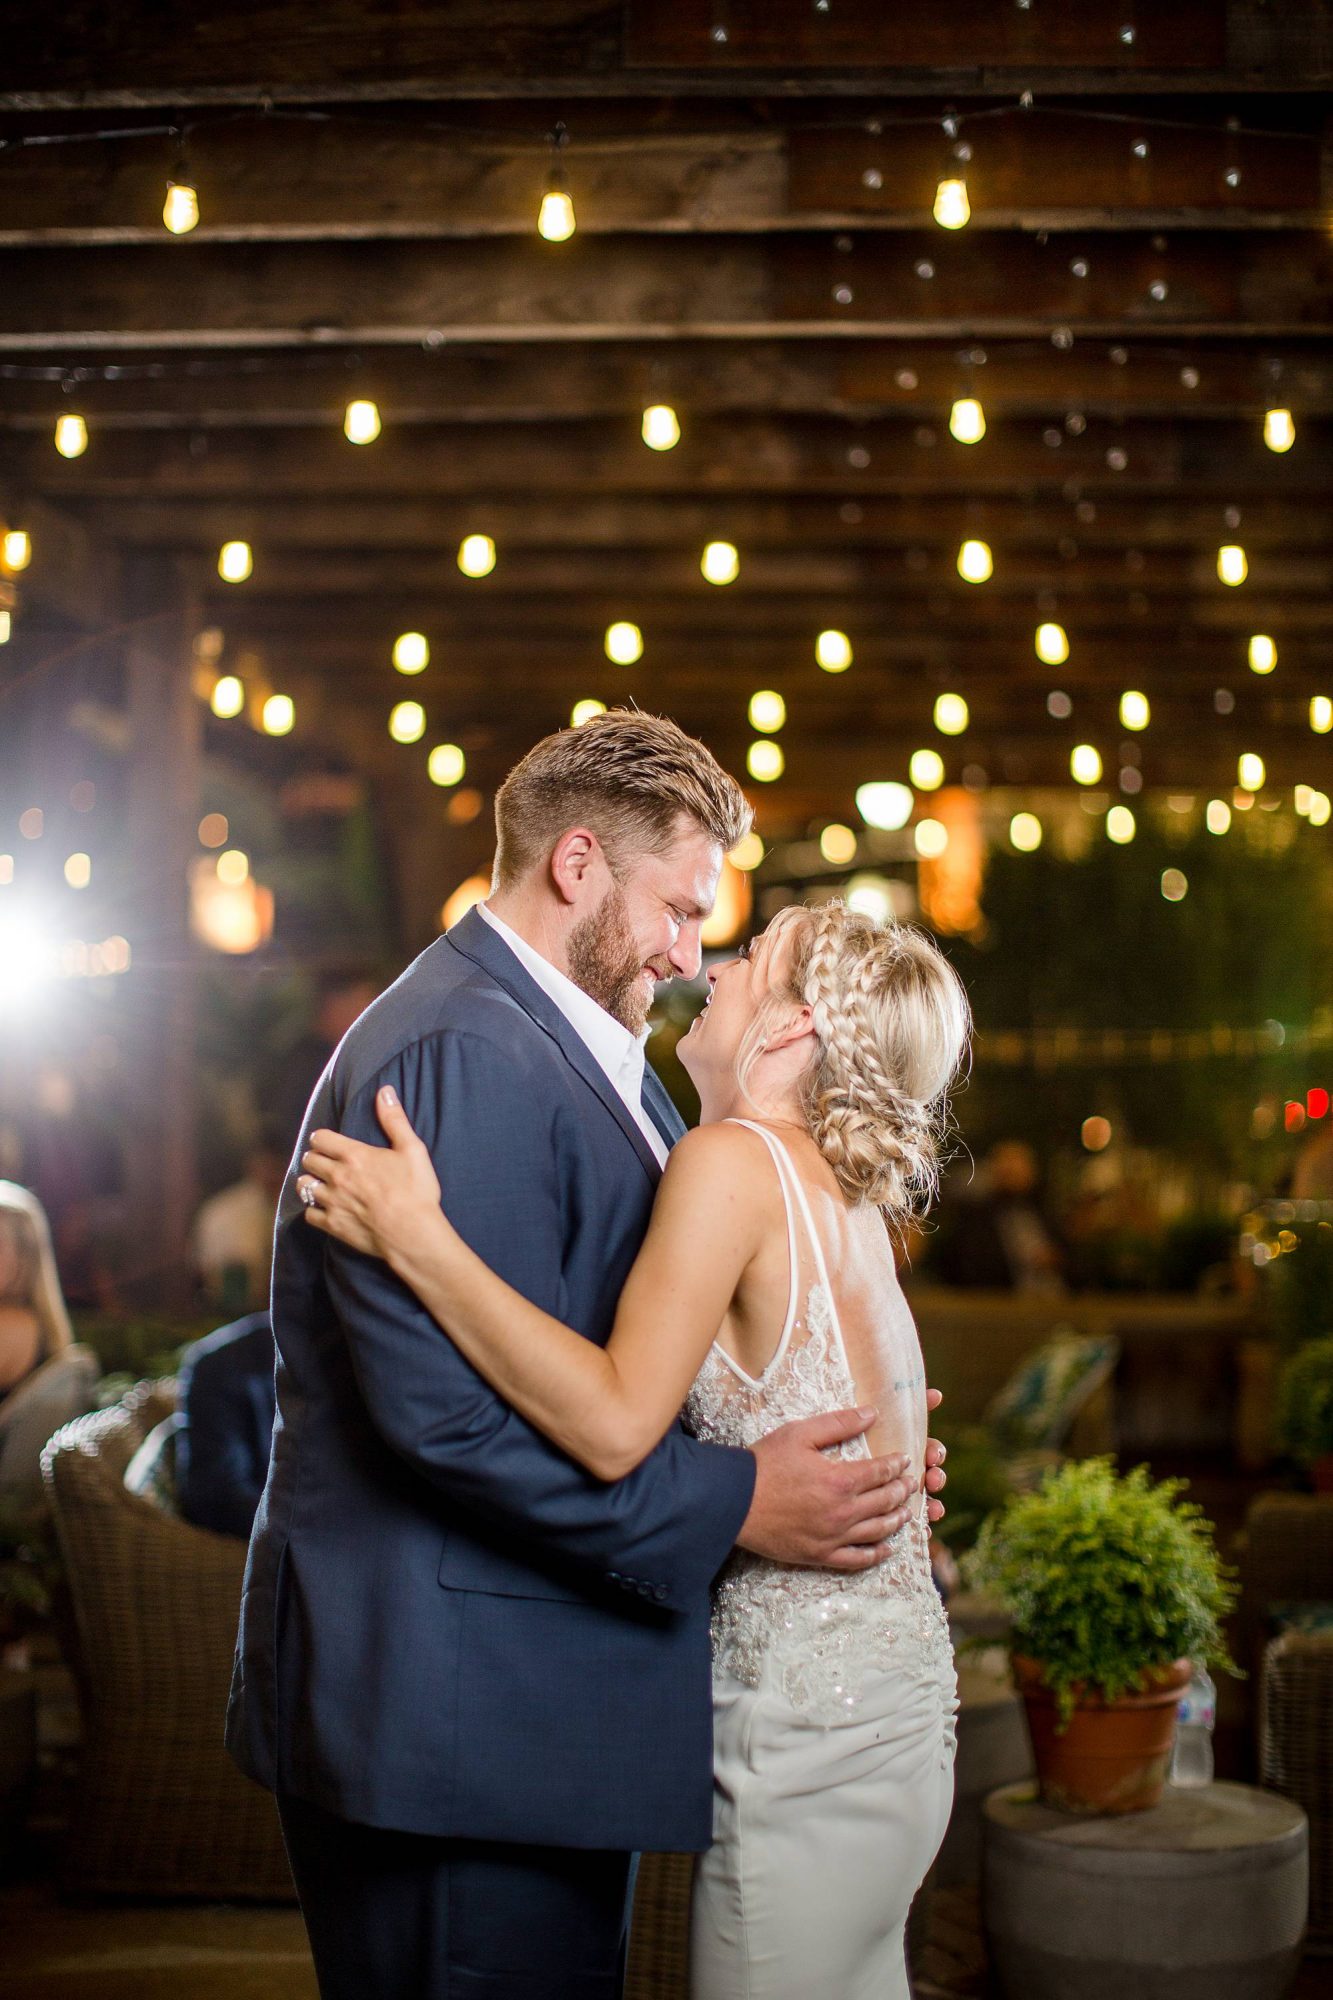 Wedding reception photographs at night at Eatori in Detroit Michigan